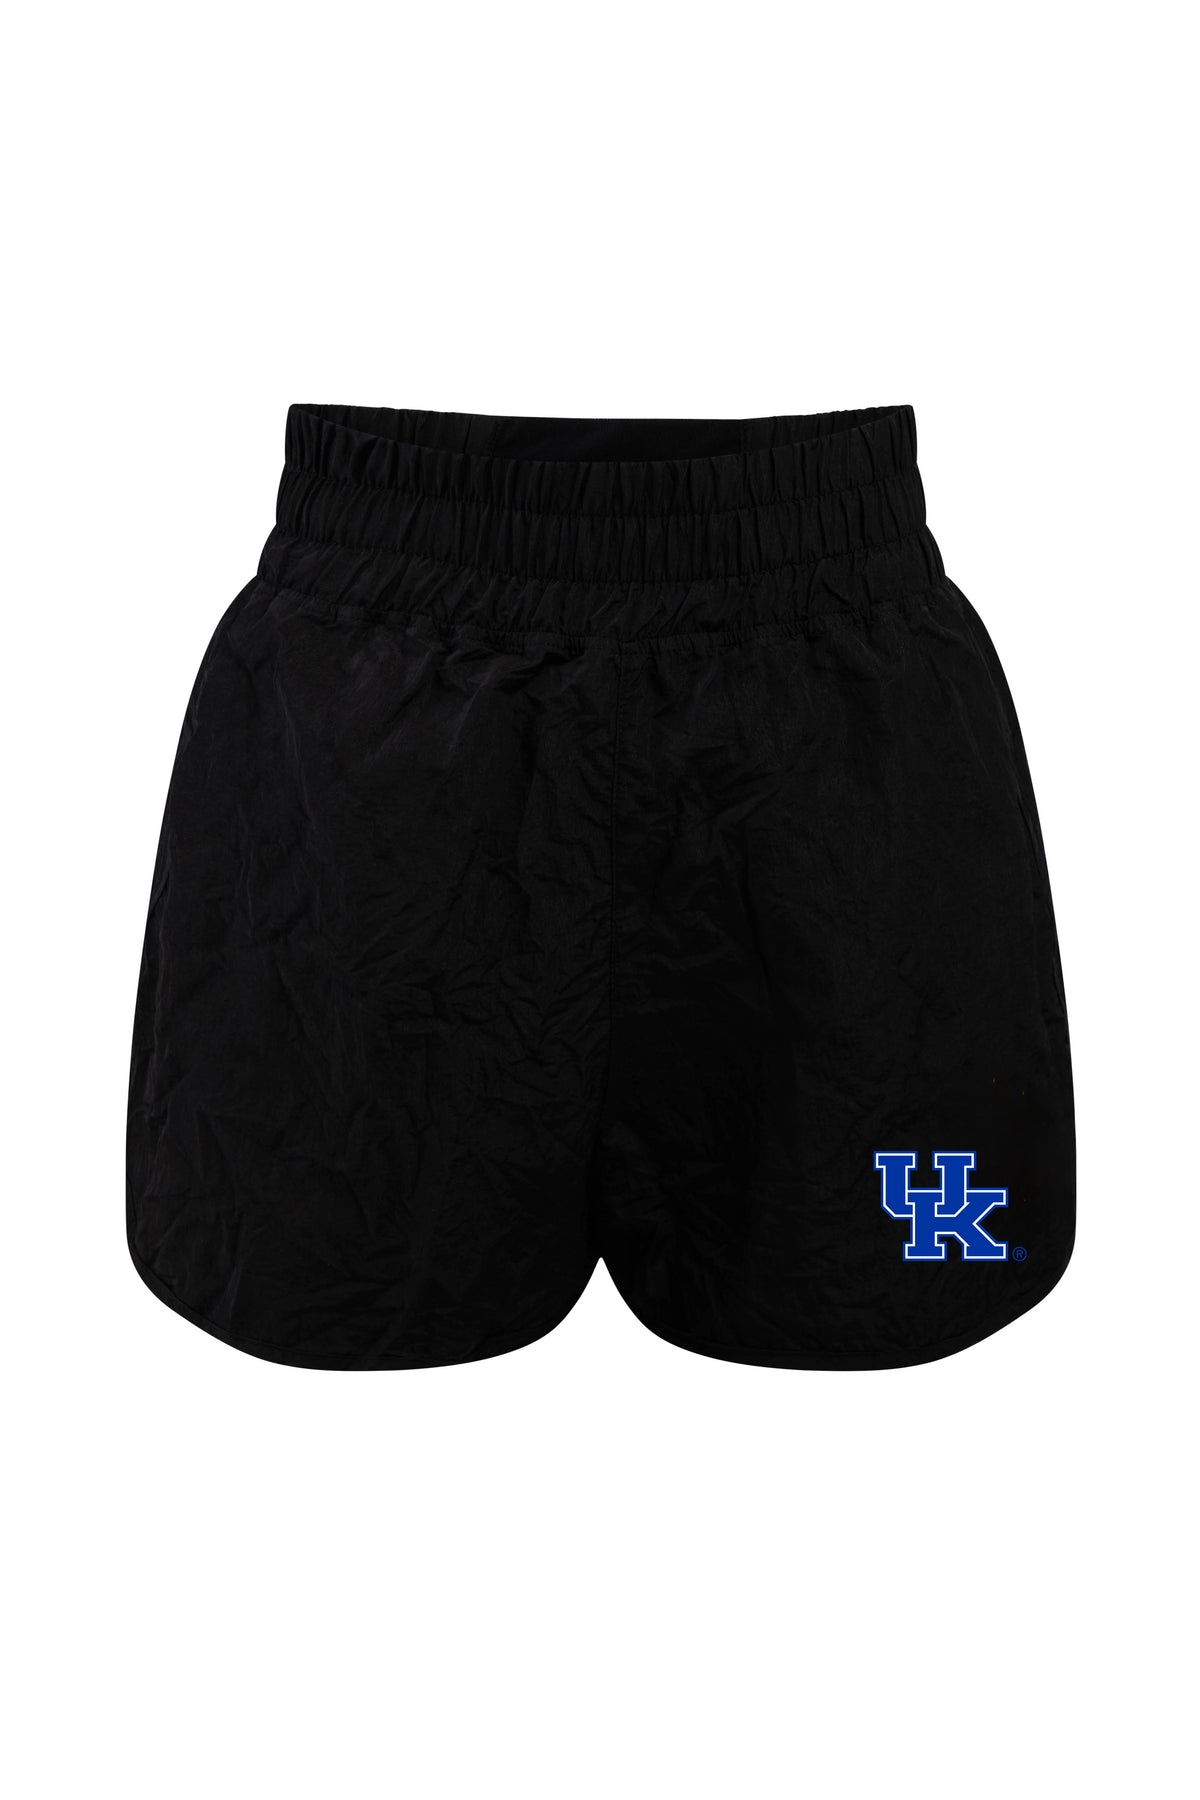 University of Kentucky Boxer Short